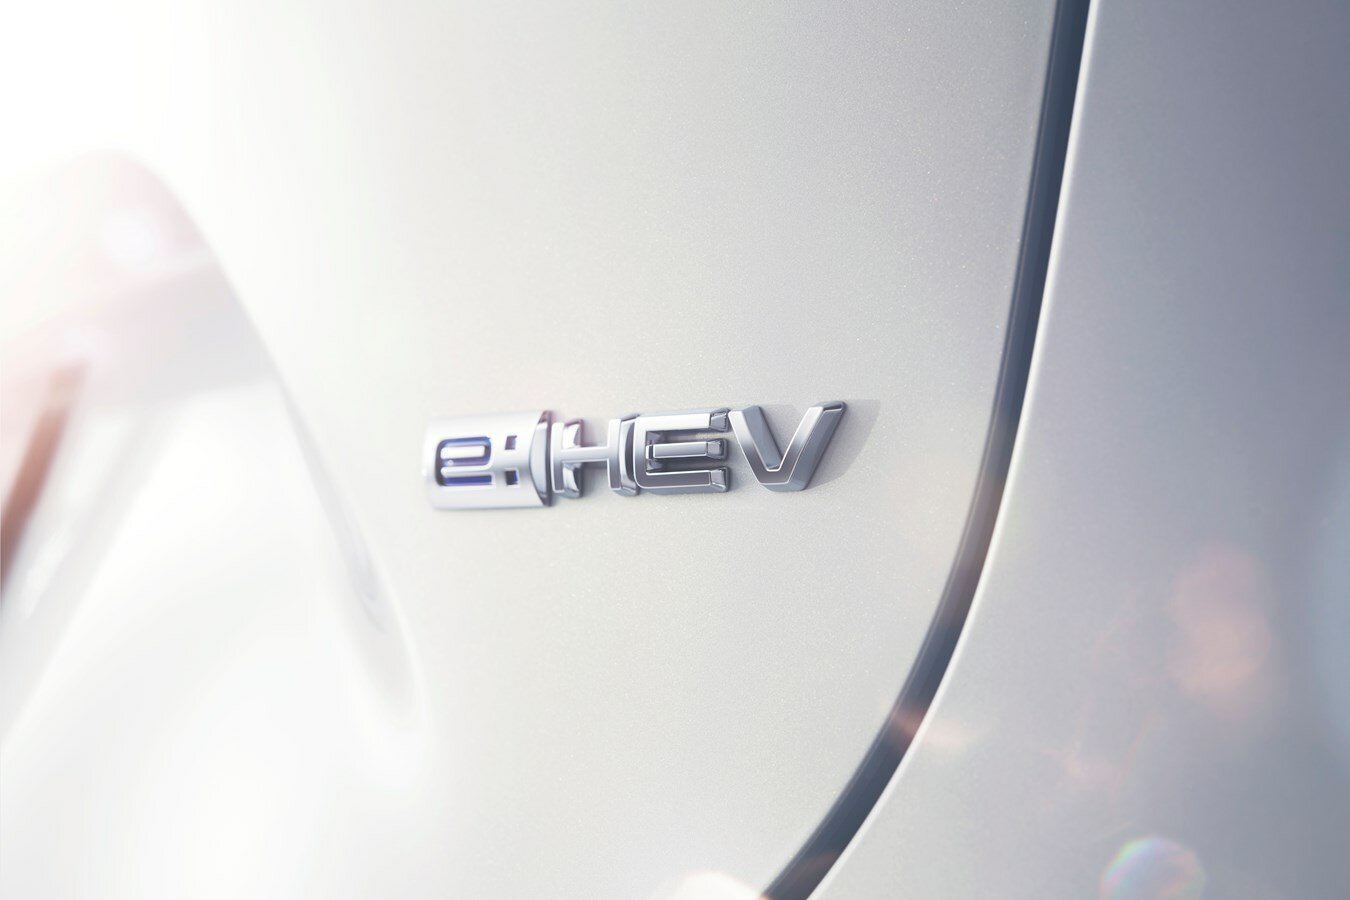 Honda HR-V bude od roku 2021 v základu vybavena vyspělou dvoumotorovou technologií hnací jednotky e:HEV